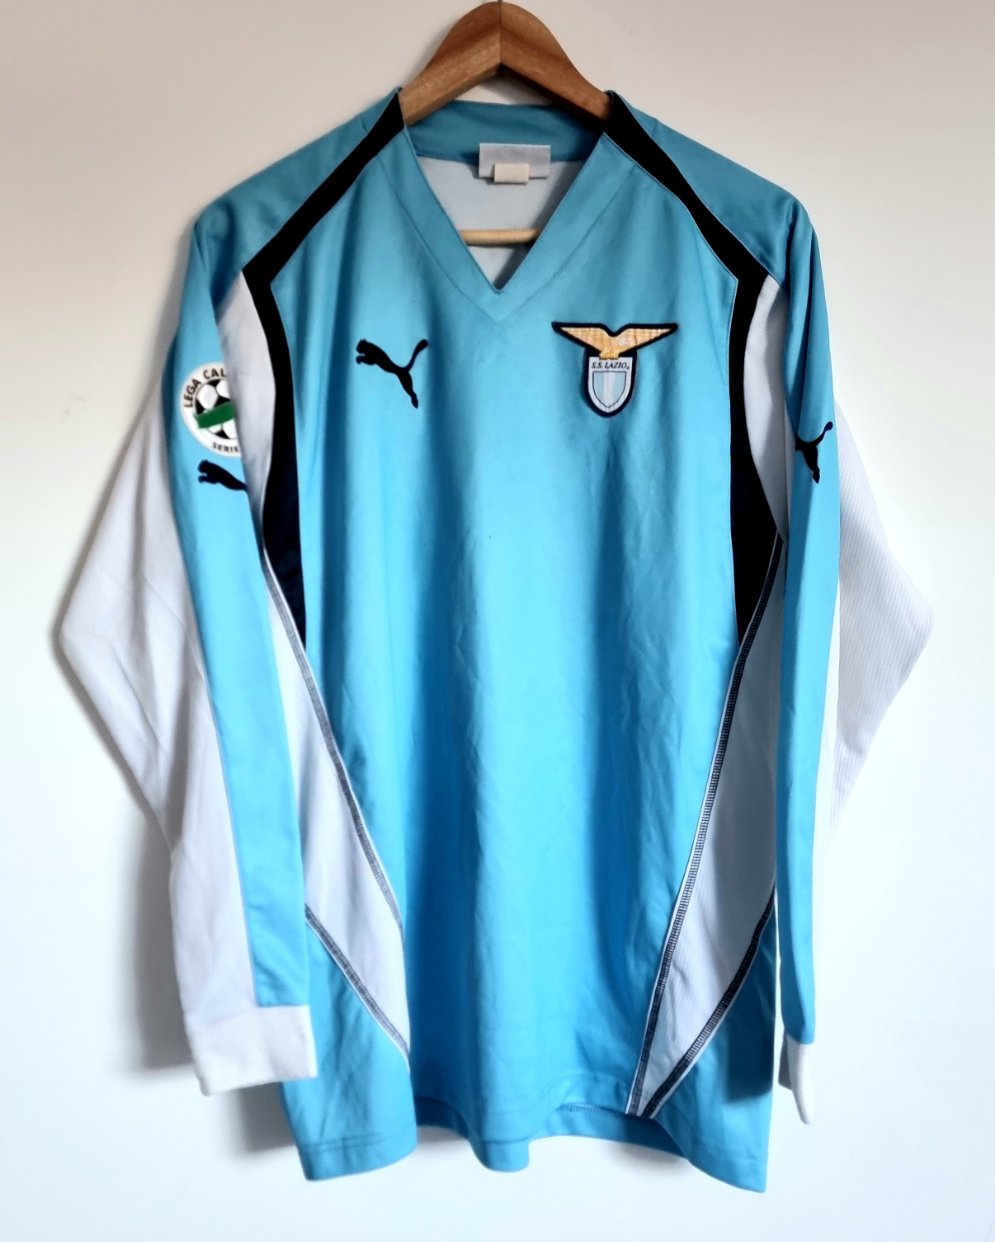 Puma Lazio 04/05 'Muzzi 11' Player Issue Long Sleeve Home Shirt Medium / Large